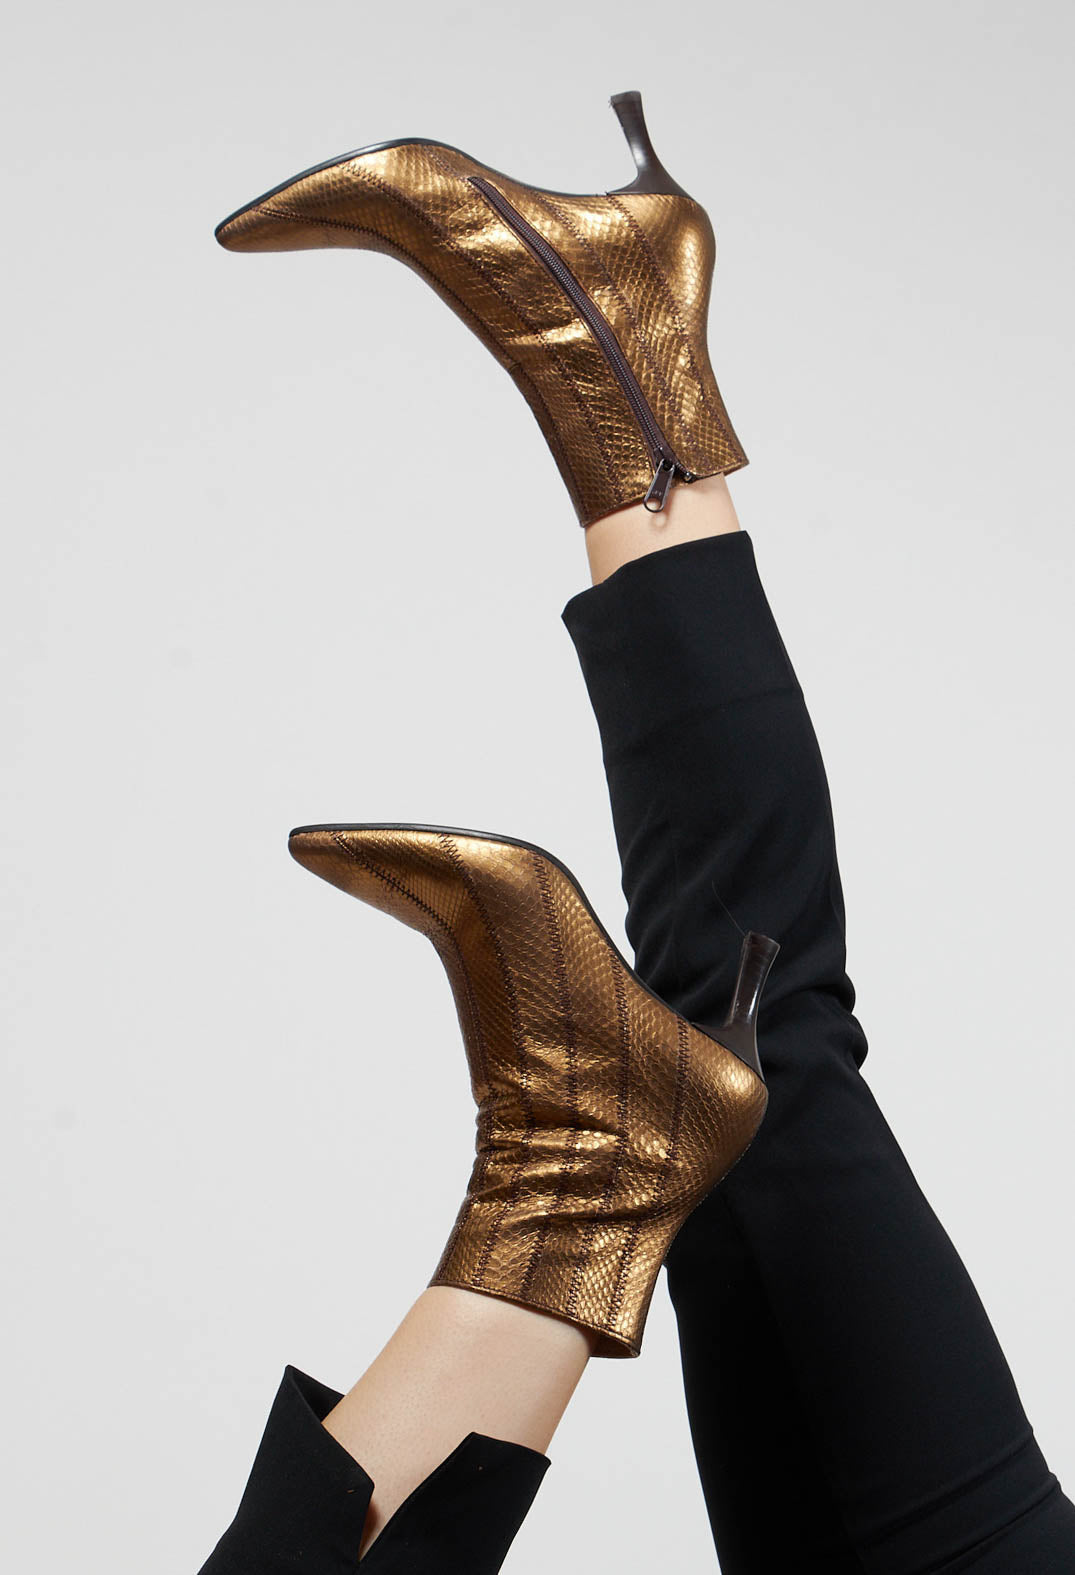 Metallic Ankle Boot Heels in Oro Metallizzato